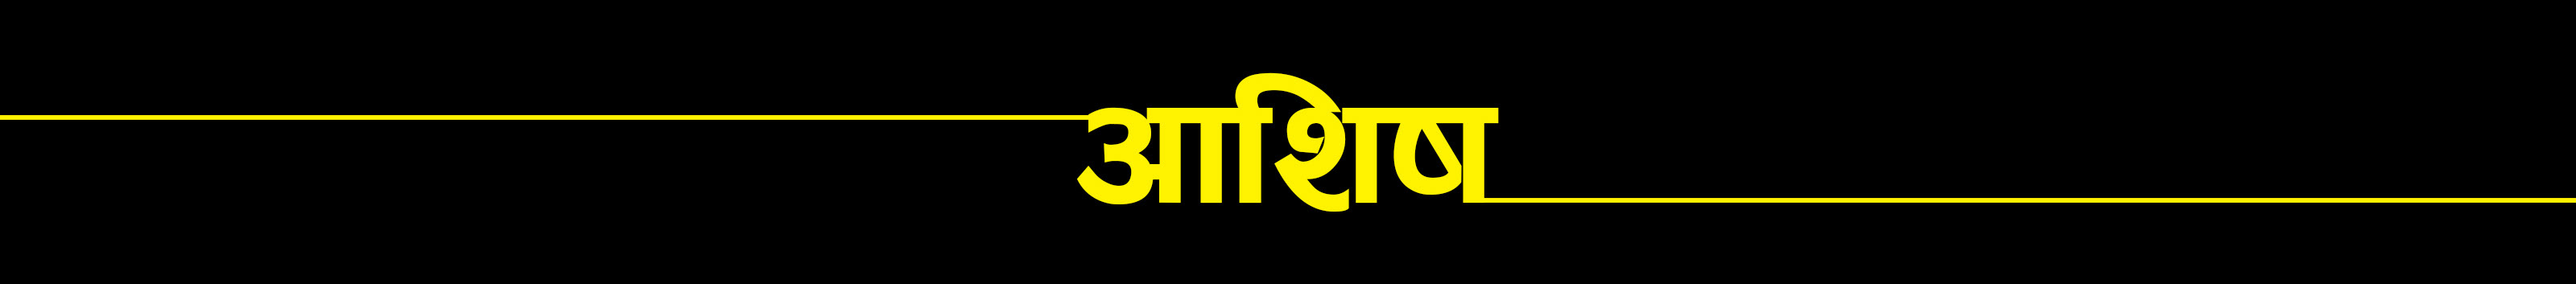 Ashish Shrestha's profile banner